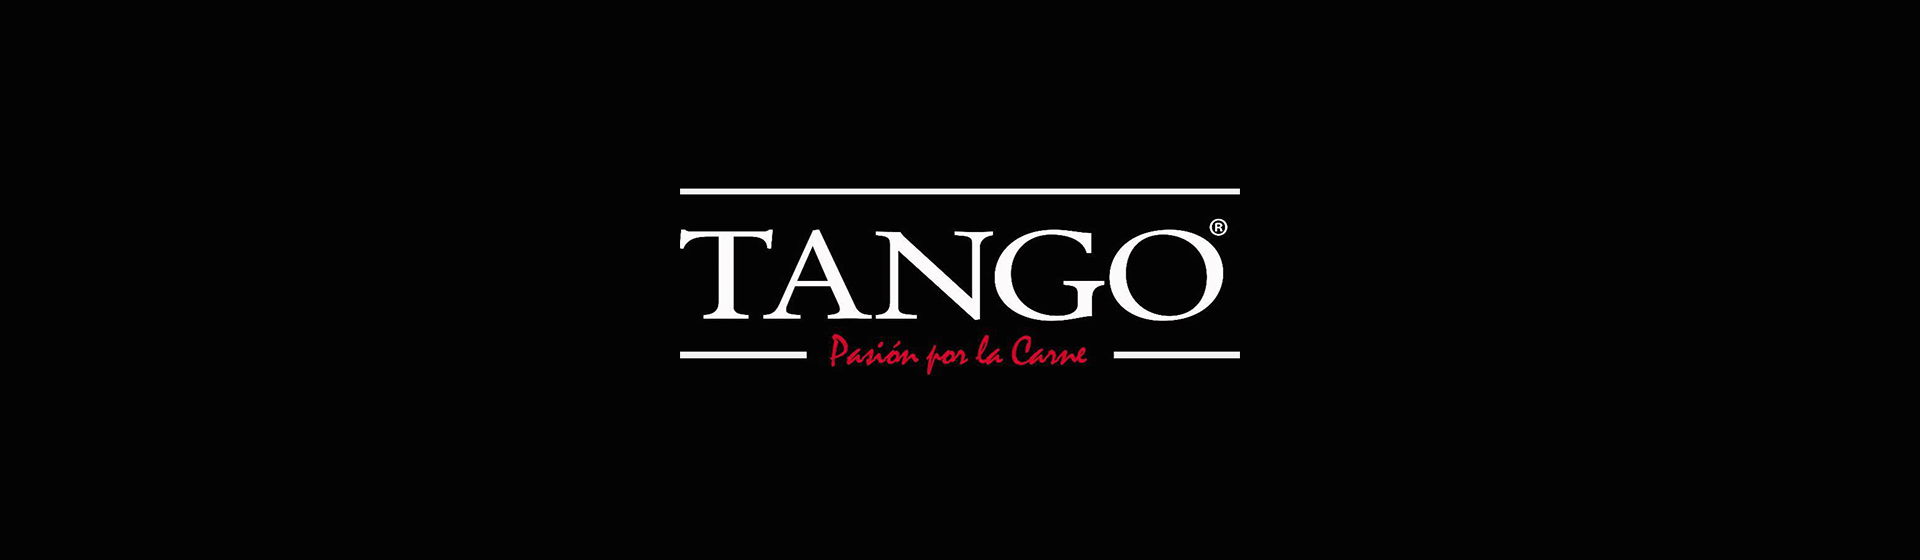 tango-banner